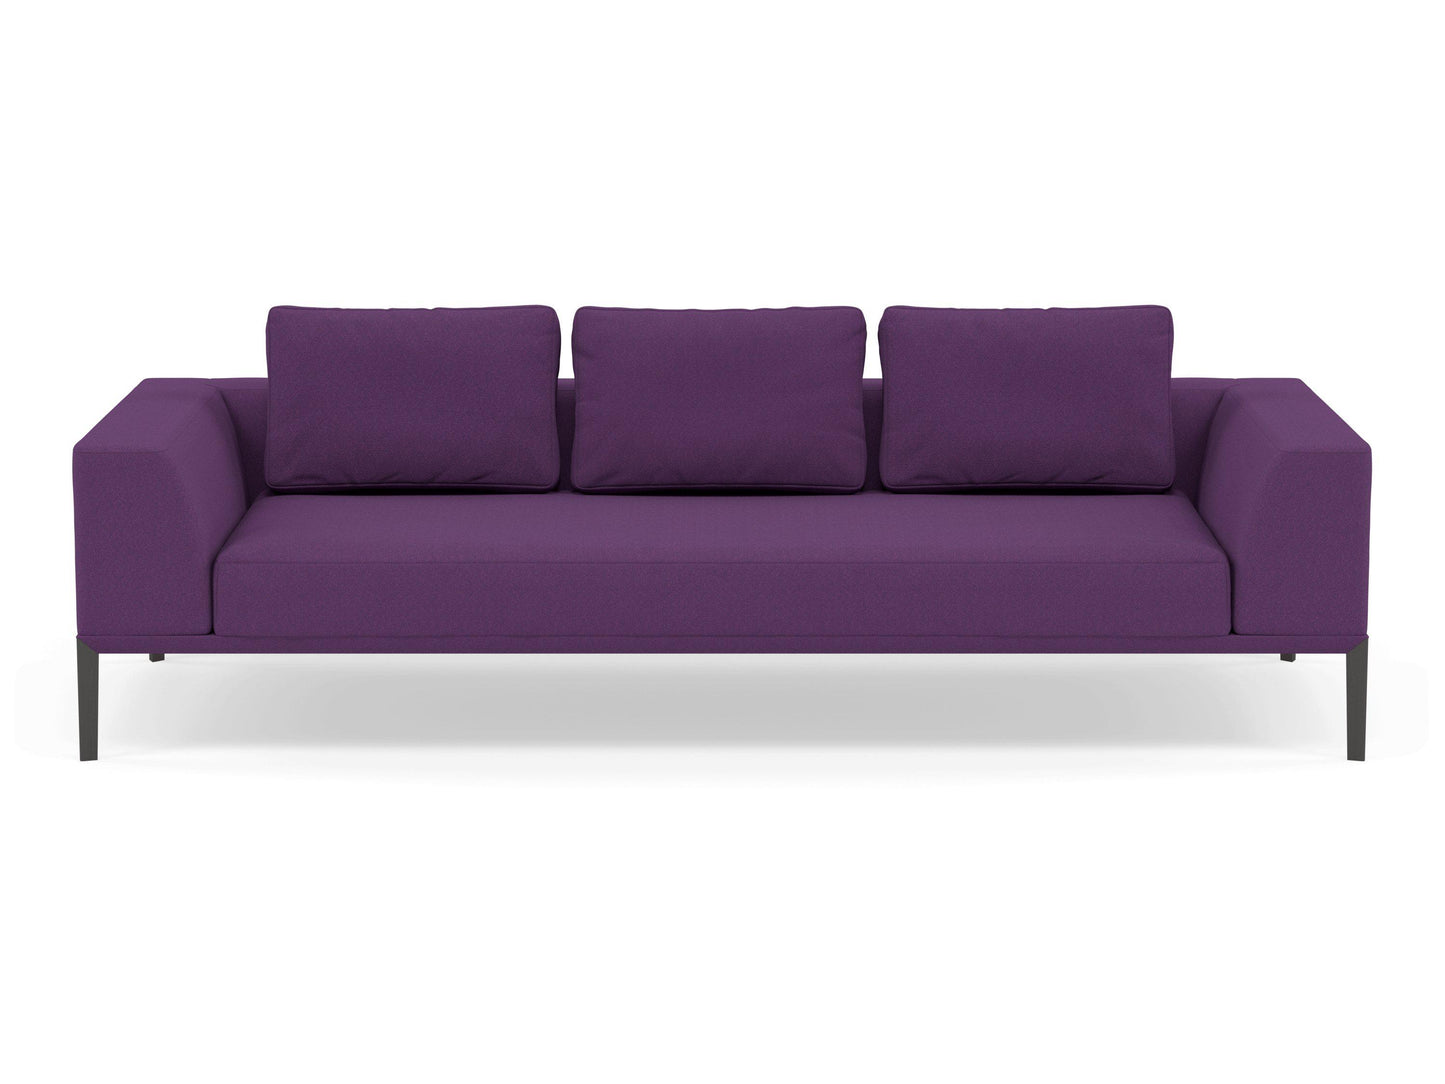 Modern 3 Seater Sofa with Armrests in Deep Purple Fabric for lounge, hotel, bar, restaurant-Wenge Oak-Distinct Designs (London) Ltd